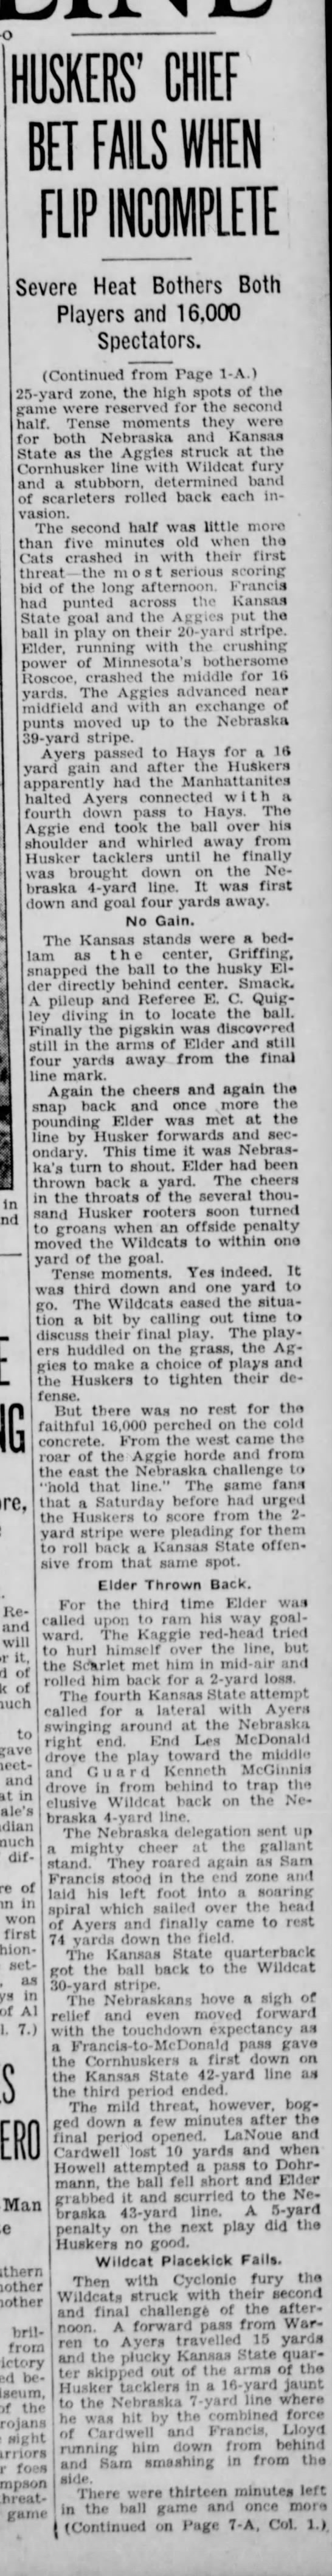 1935 Nebraska-Kansas State football, part 2 - 